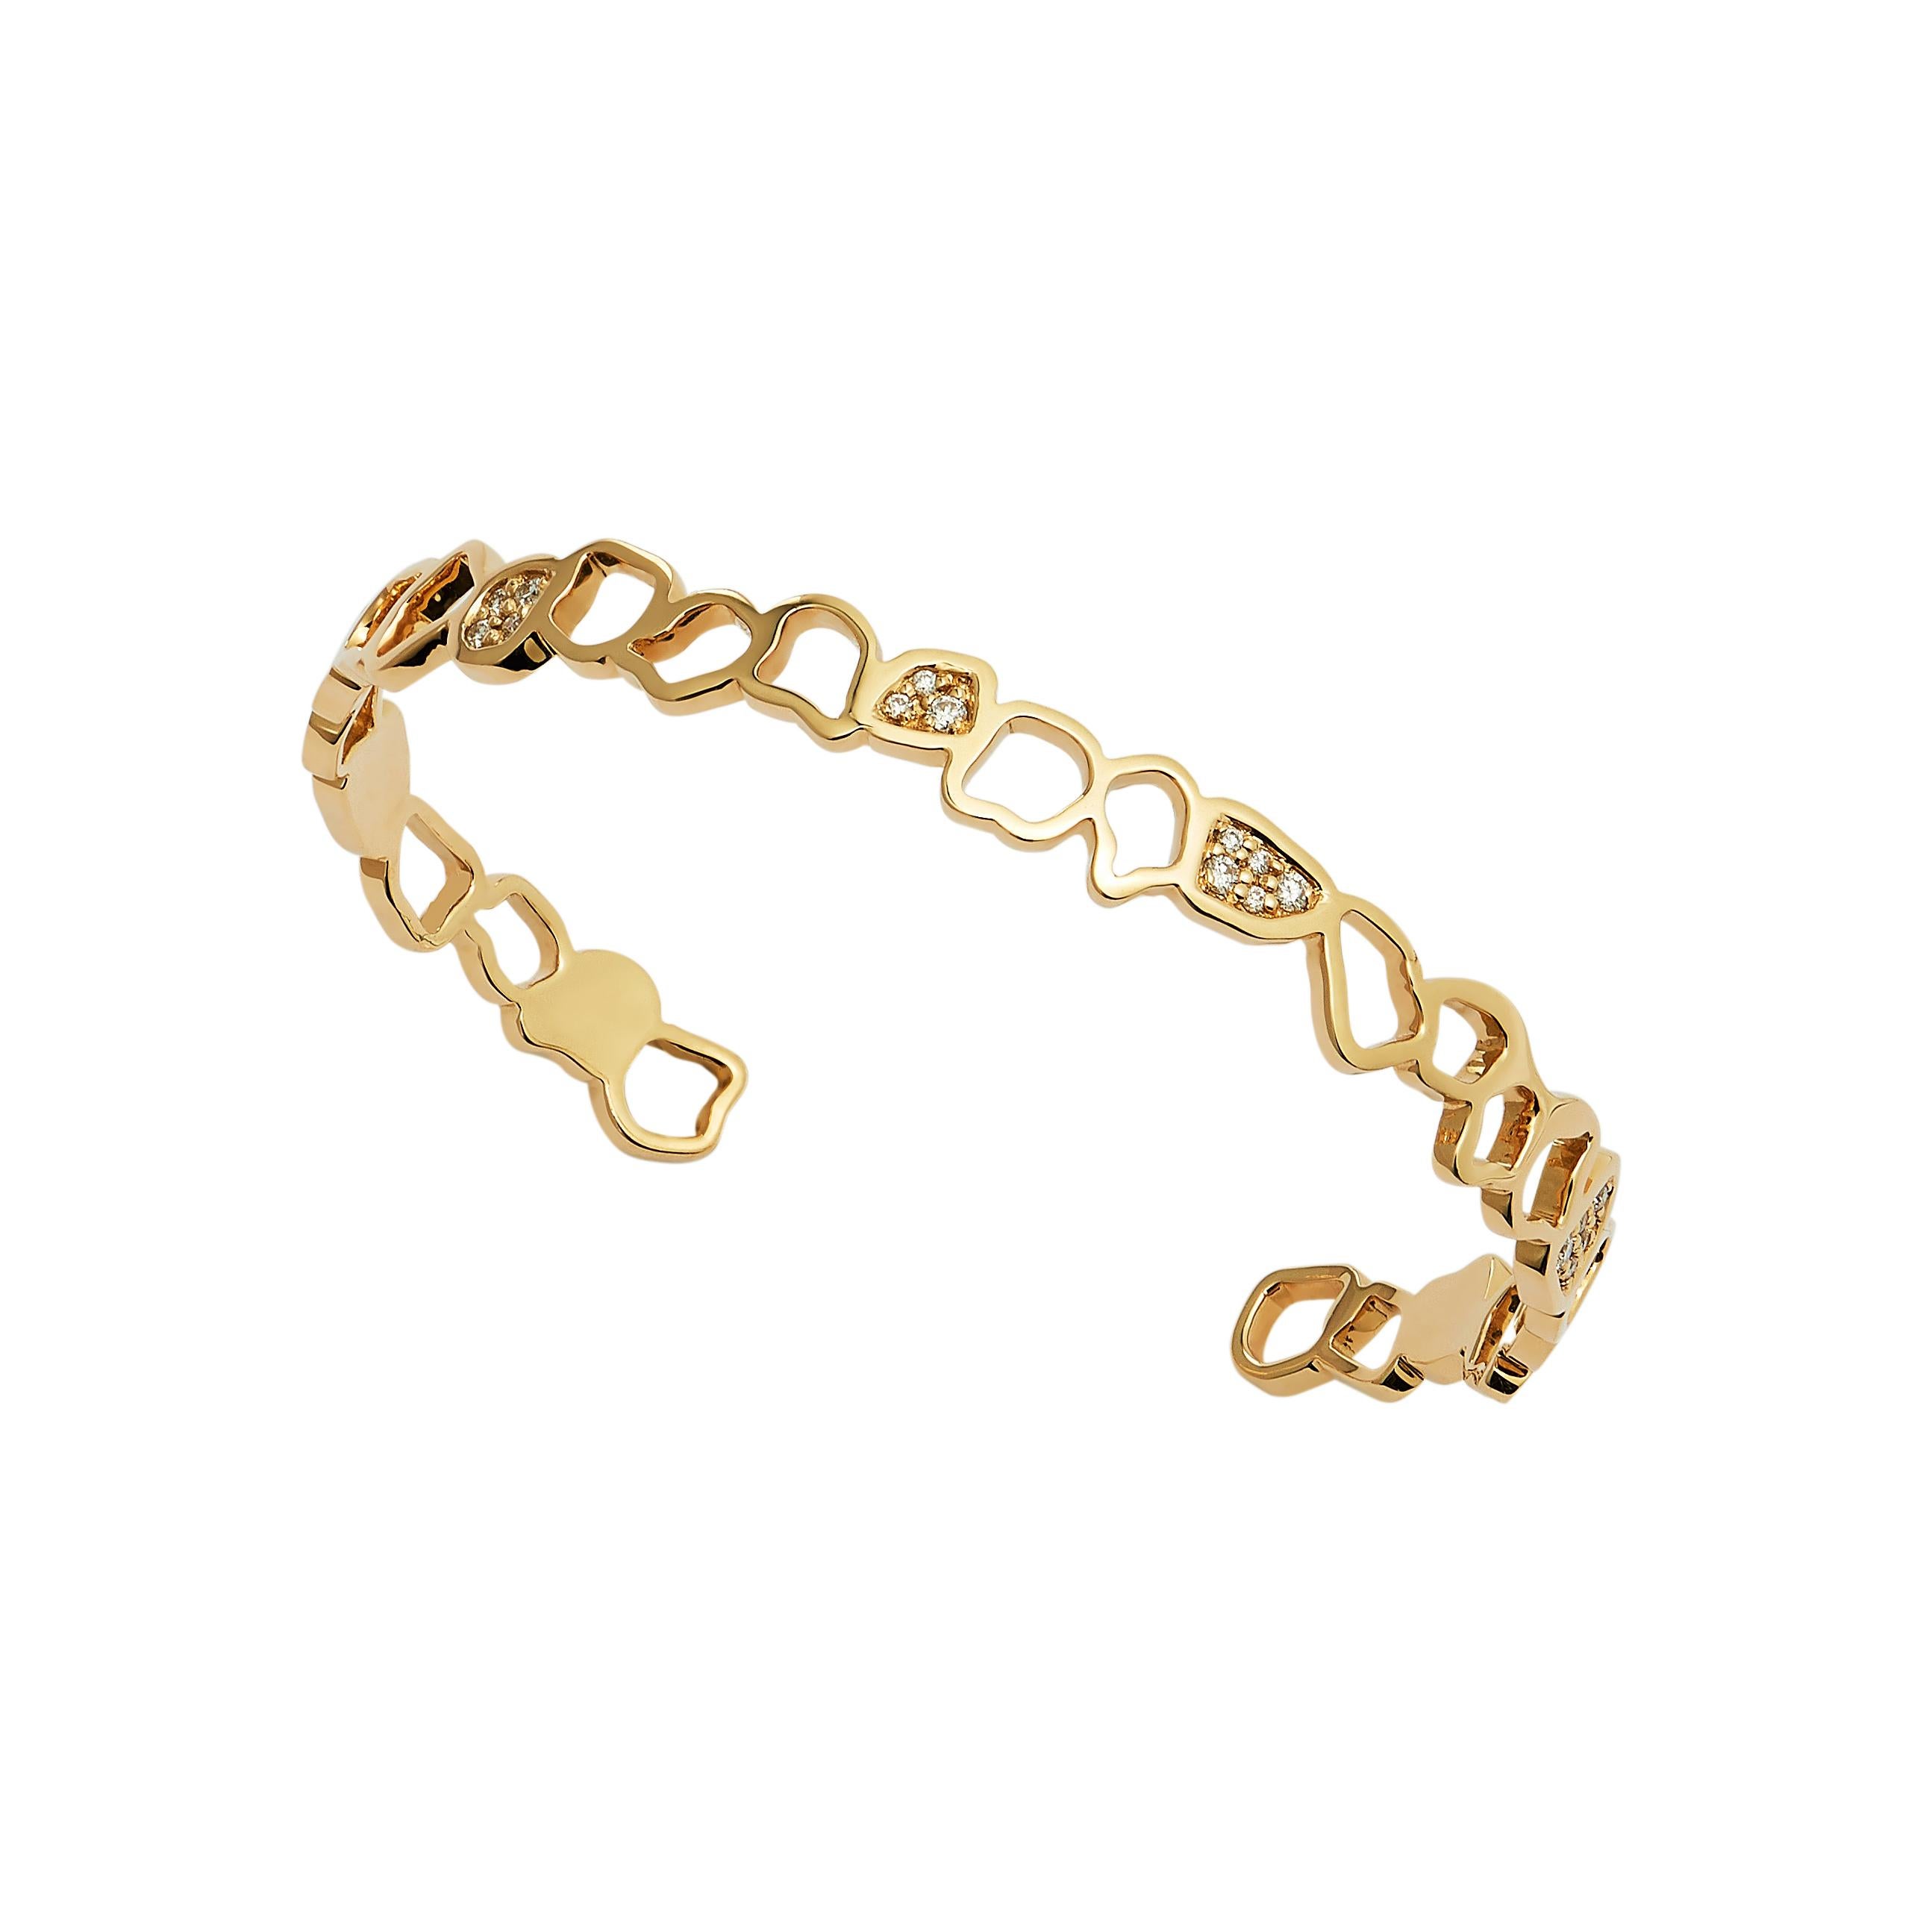 Brilliant Cut 18 Karat Yellow Gold Cuff Bracelet With Diamonds For Sale